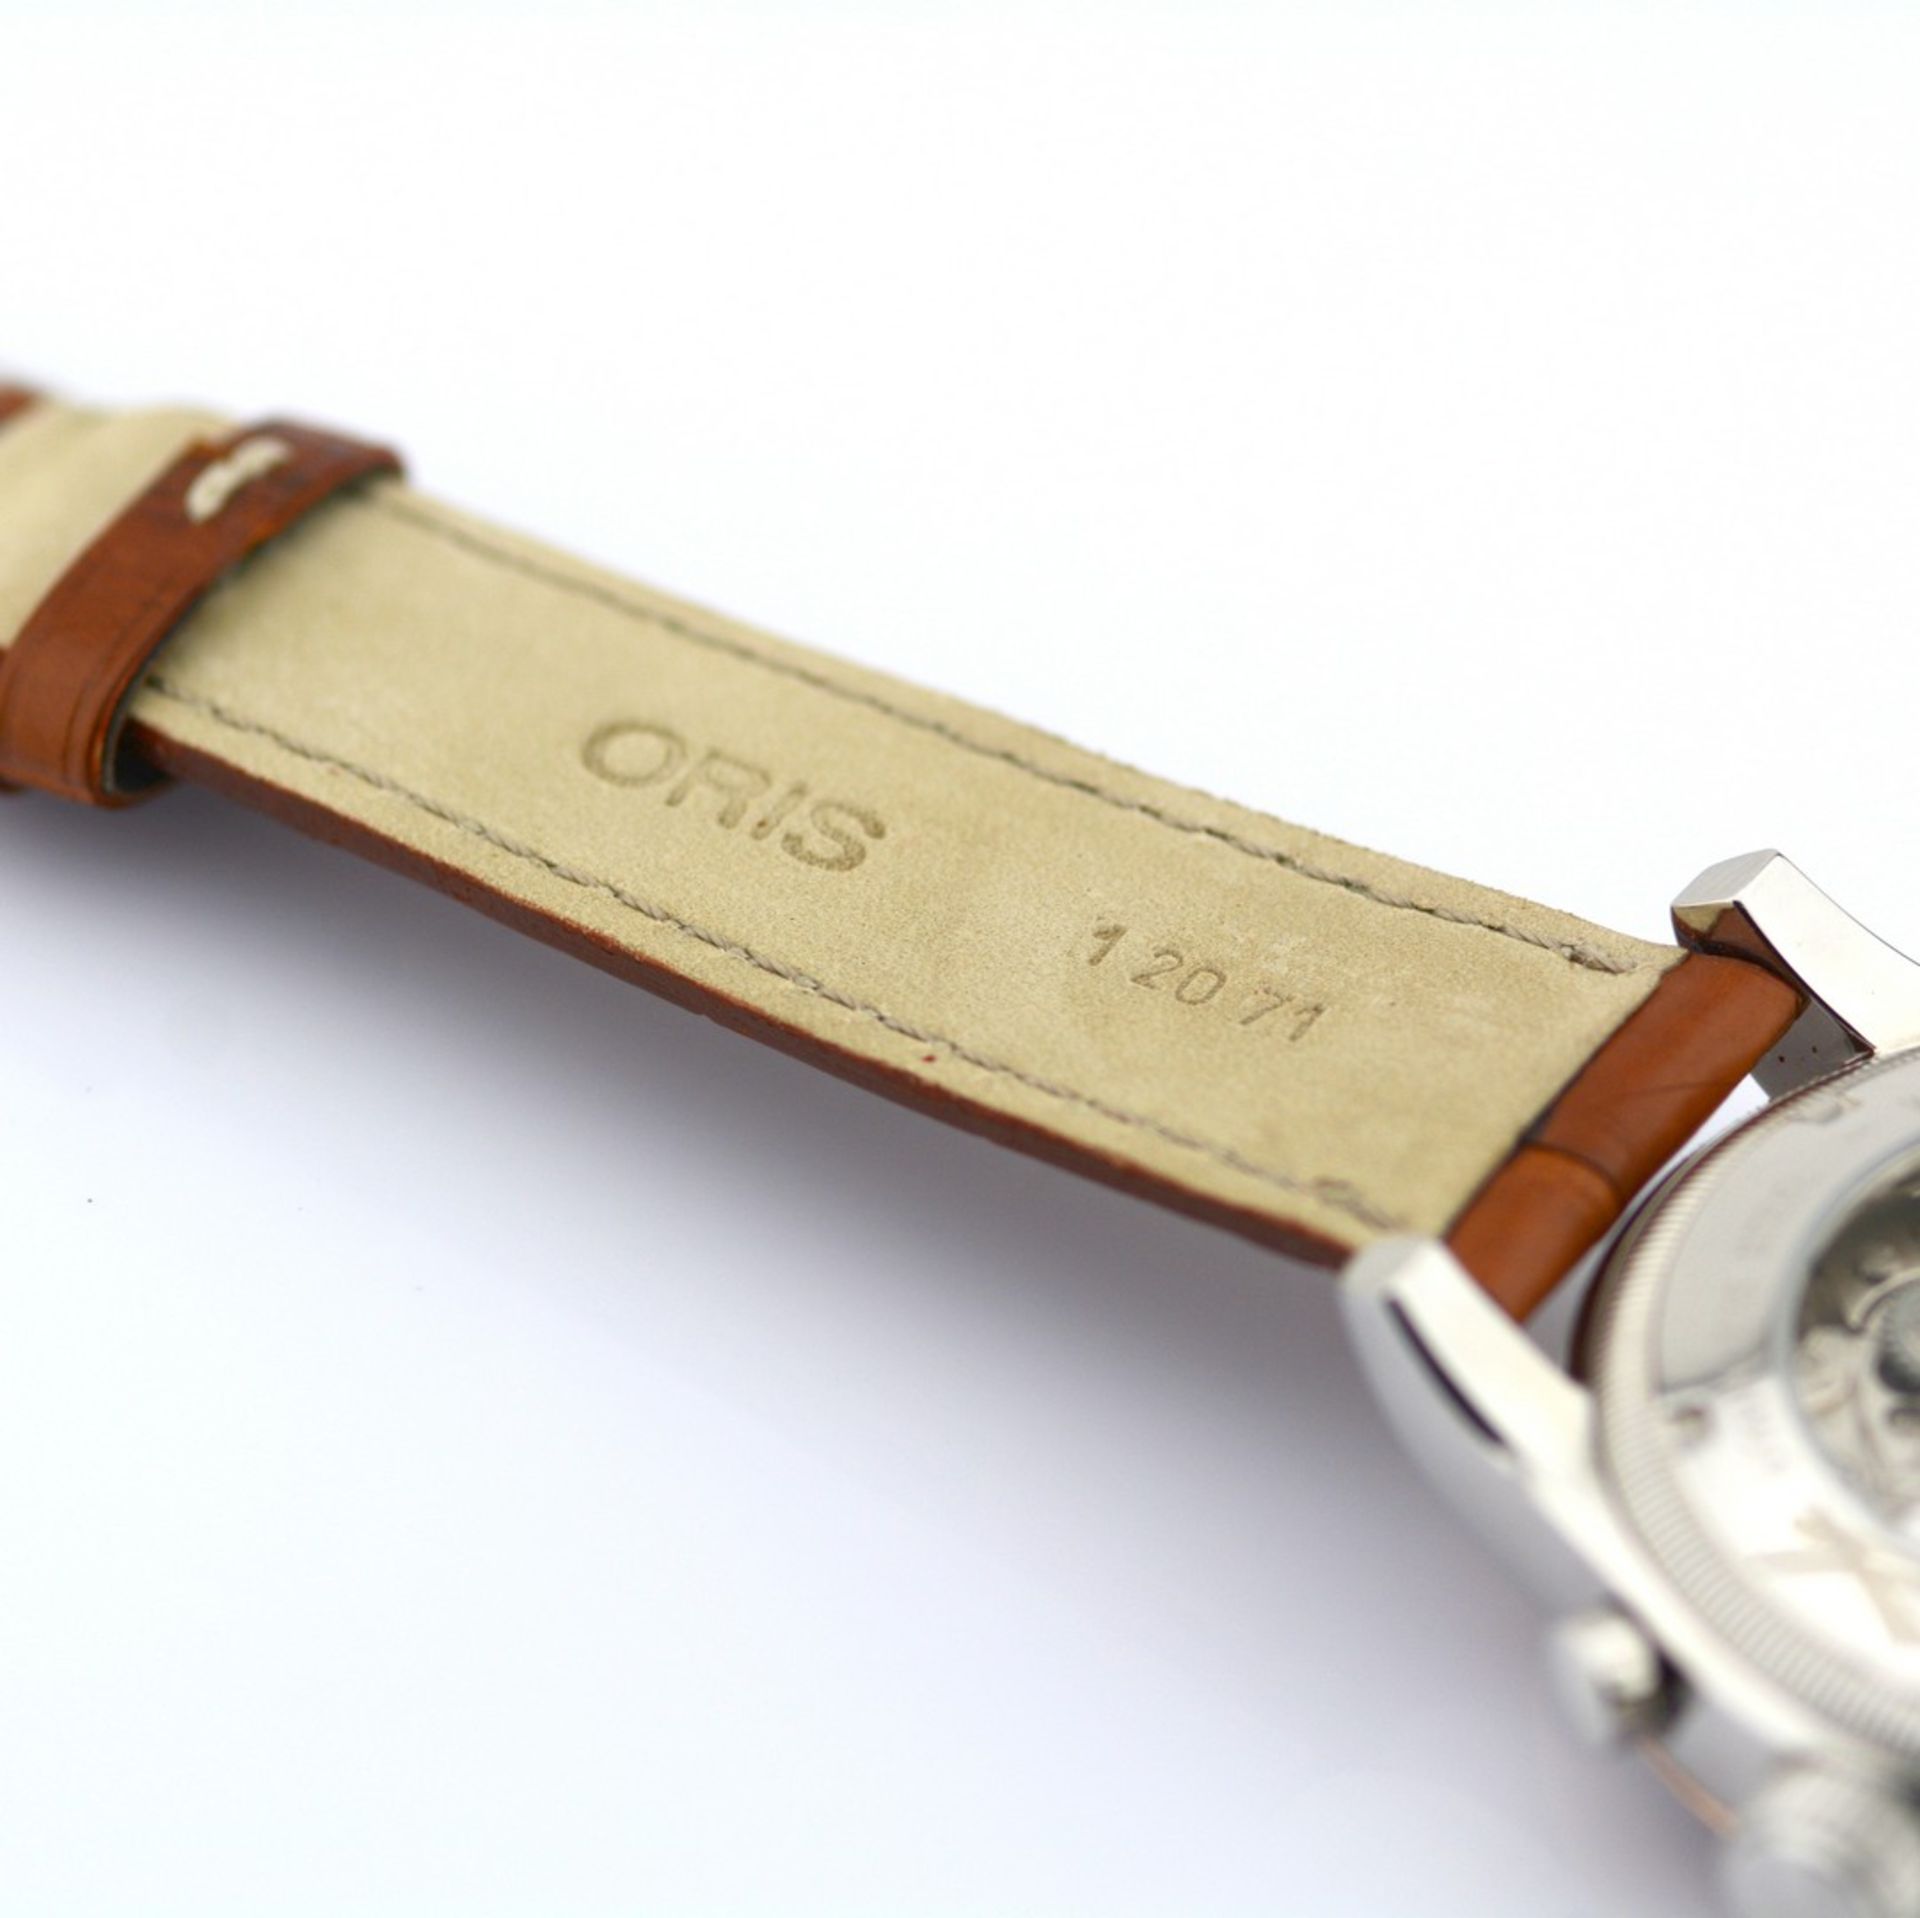 Oris / Big Crown 7567 Chronograph Automatic - Date - Gentlmen's Steel Wrist Watch - Image 5 of 7